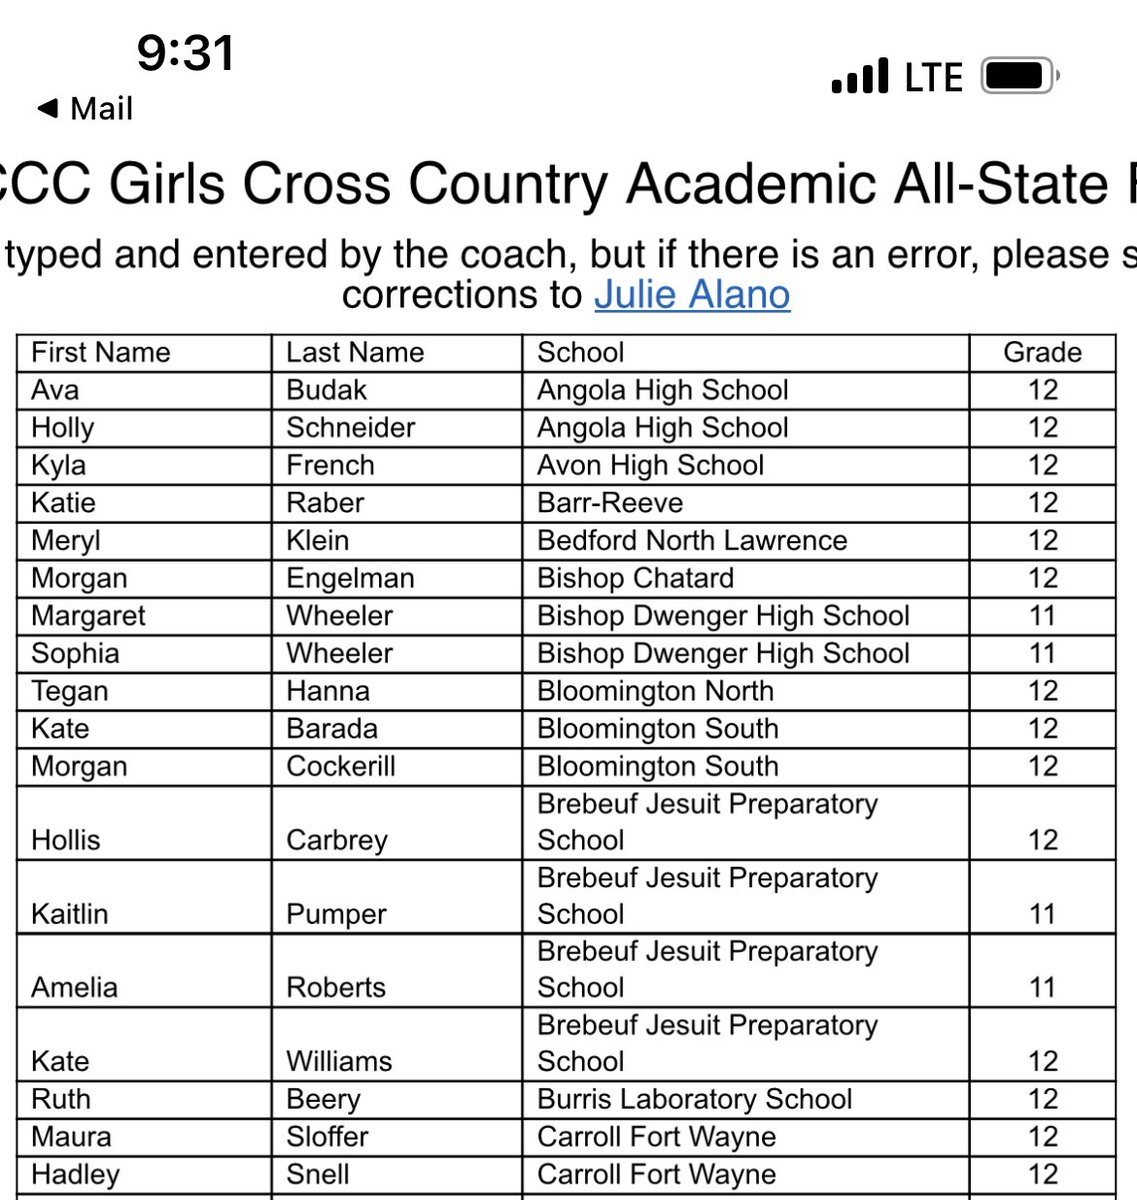 1st Team Academic All-State for cross country! @BHSS_Athletics @DePauwSoftball